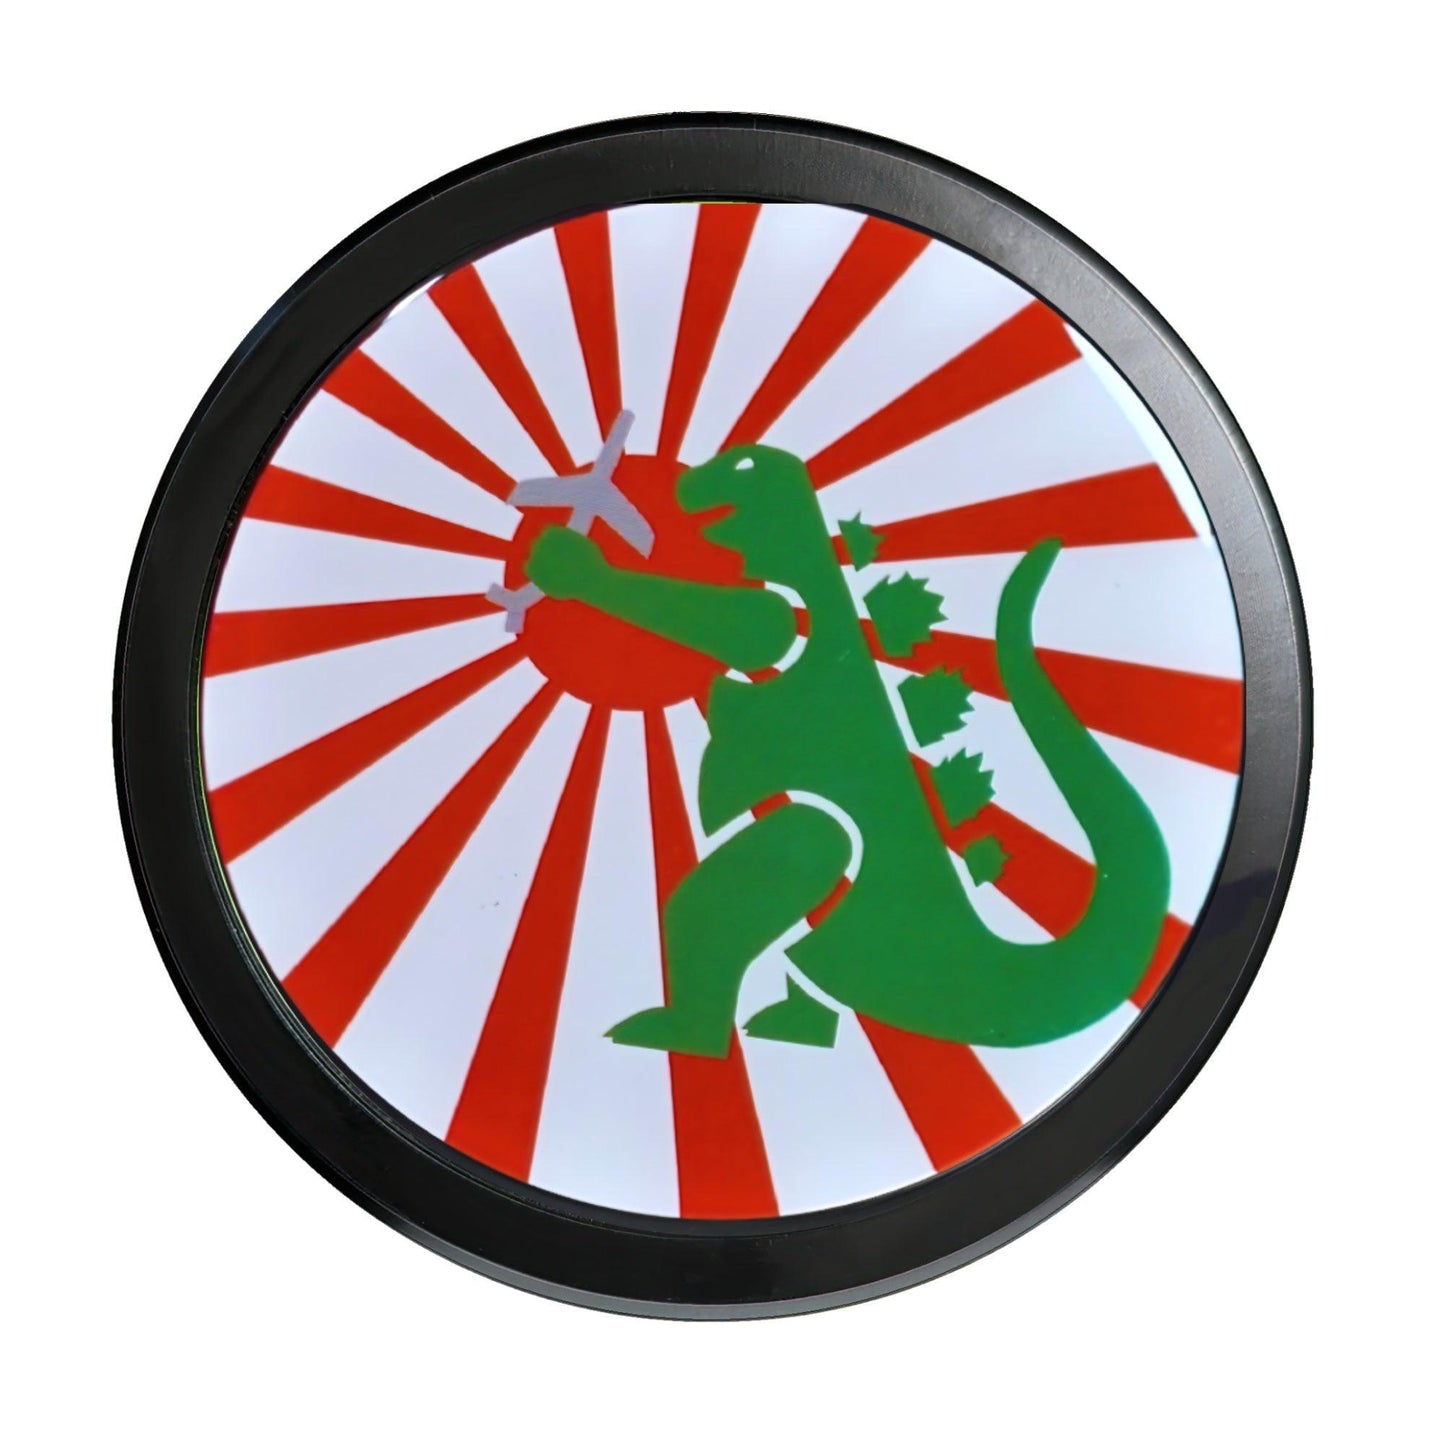 Grille Badge Emblem Aluminum Fits Toyota Tokyo Style 4WD Emblem